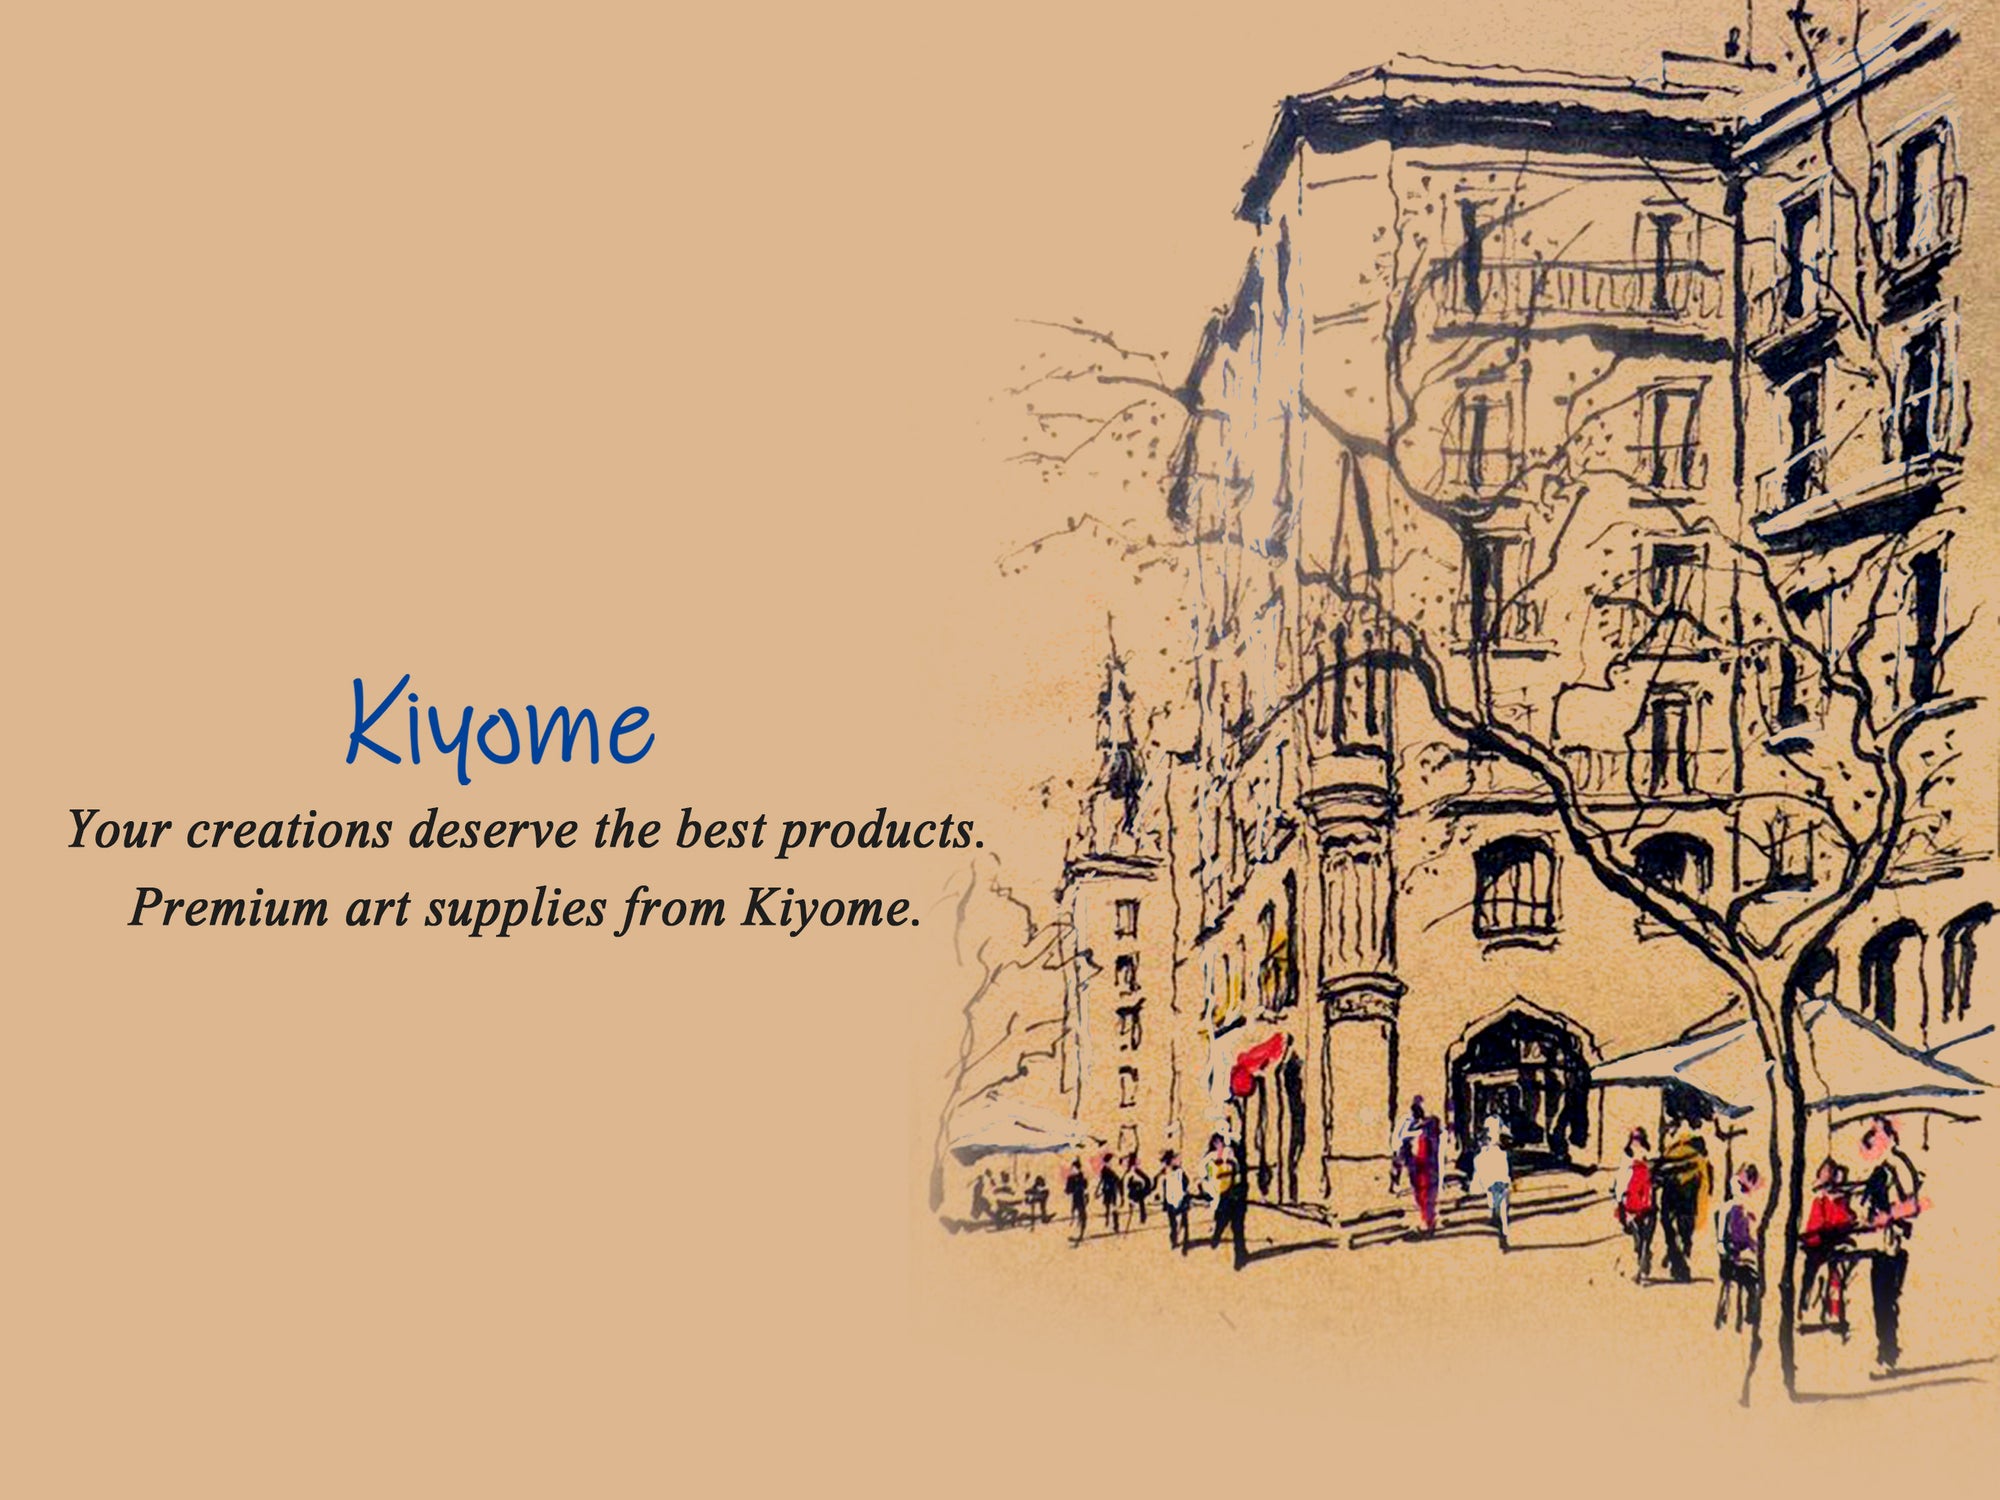 Kiyome Kraft Paper | 180 GSM | A4 | 30 Sheets